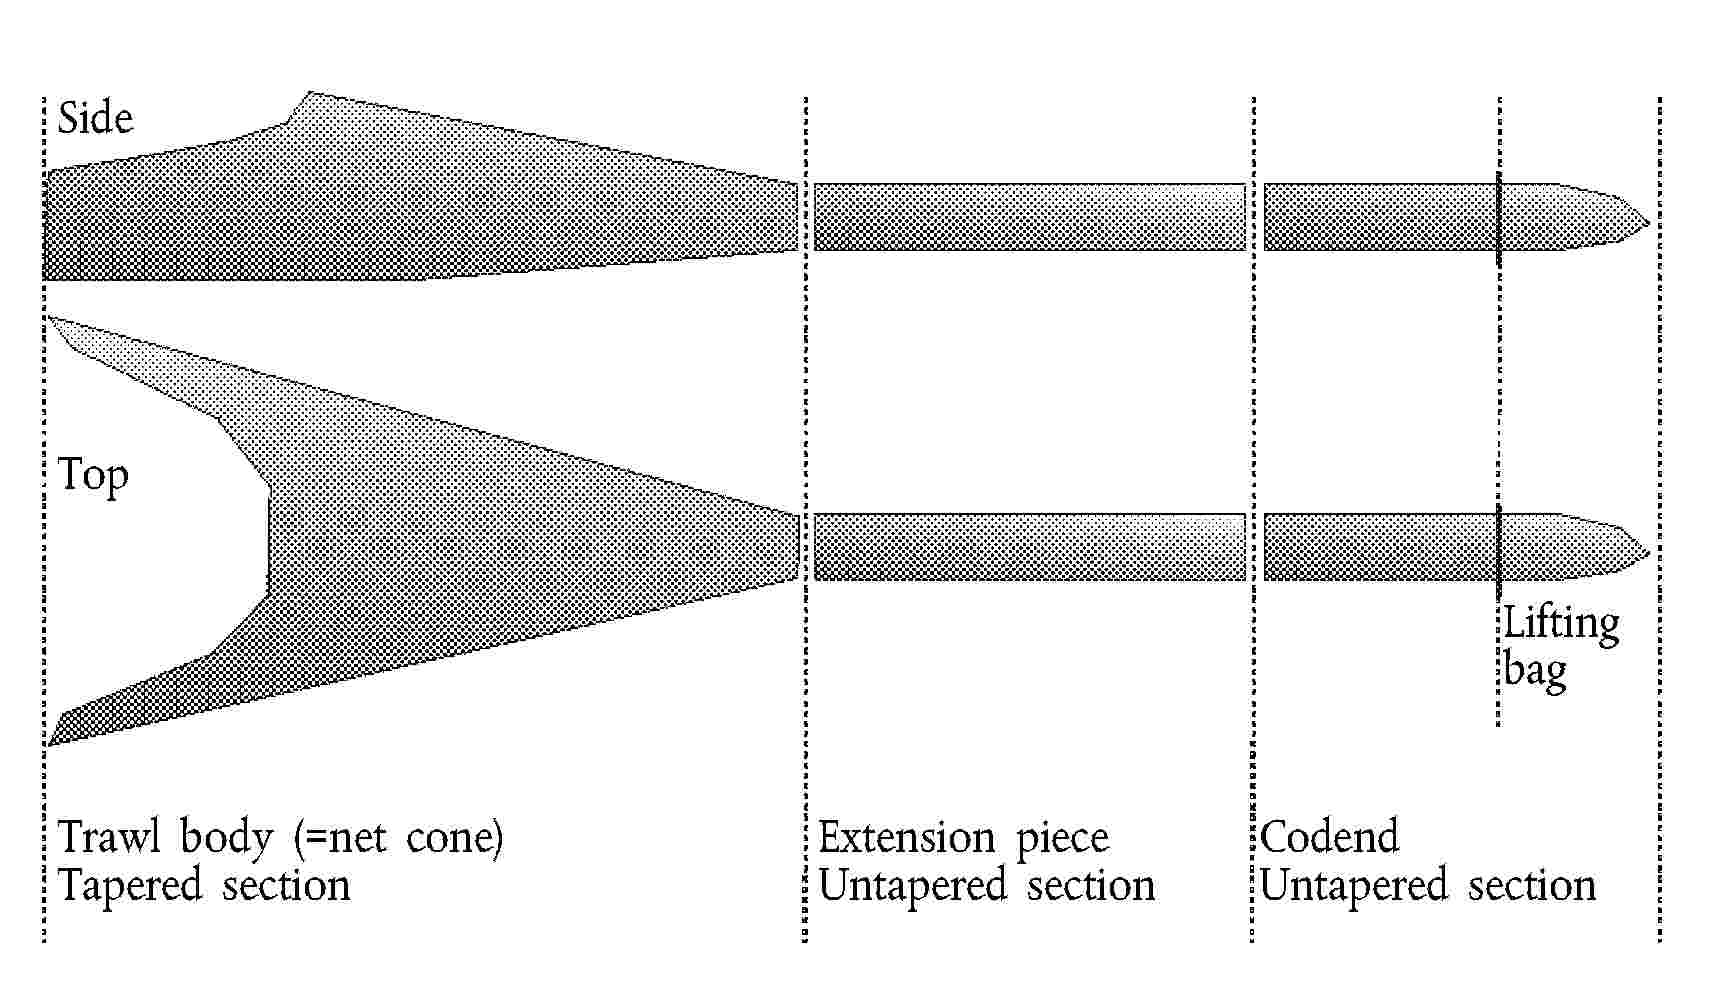 SideTopTrawl body (=net cone)Tapered sectionExtension pieceUntapered sectionCodendUntapered sectionLifting bag